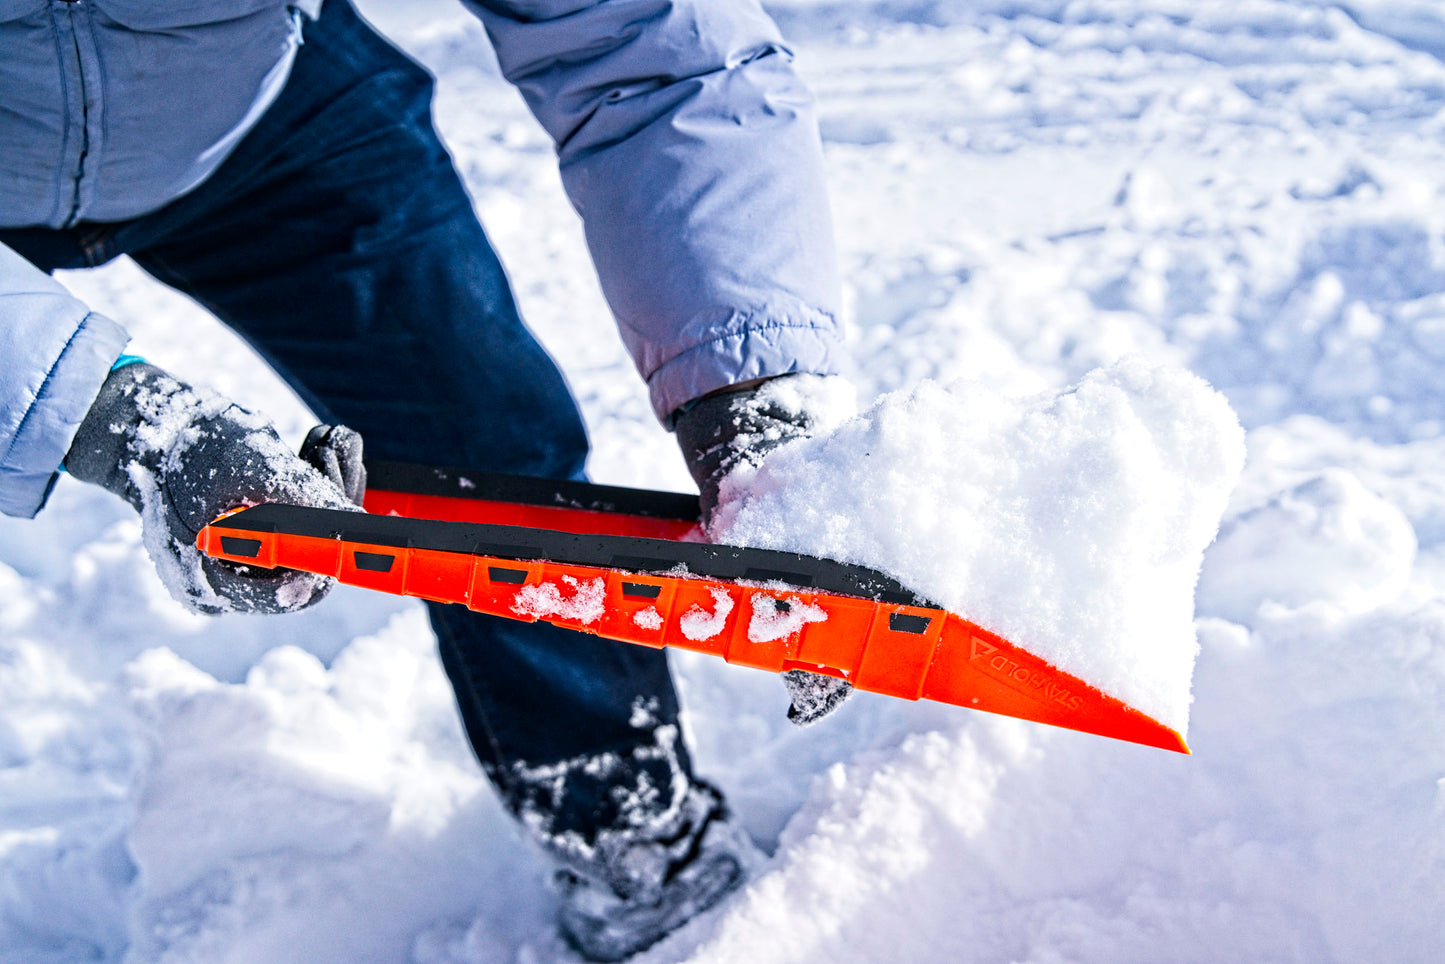 Stayhold Compact Safety Shovel shovelling snow